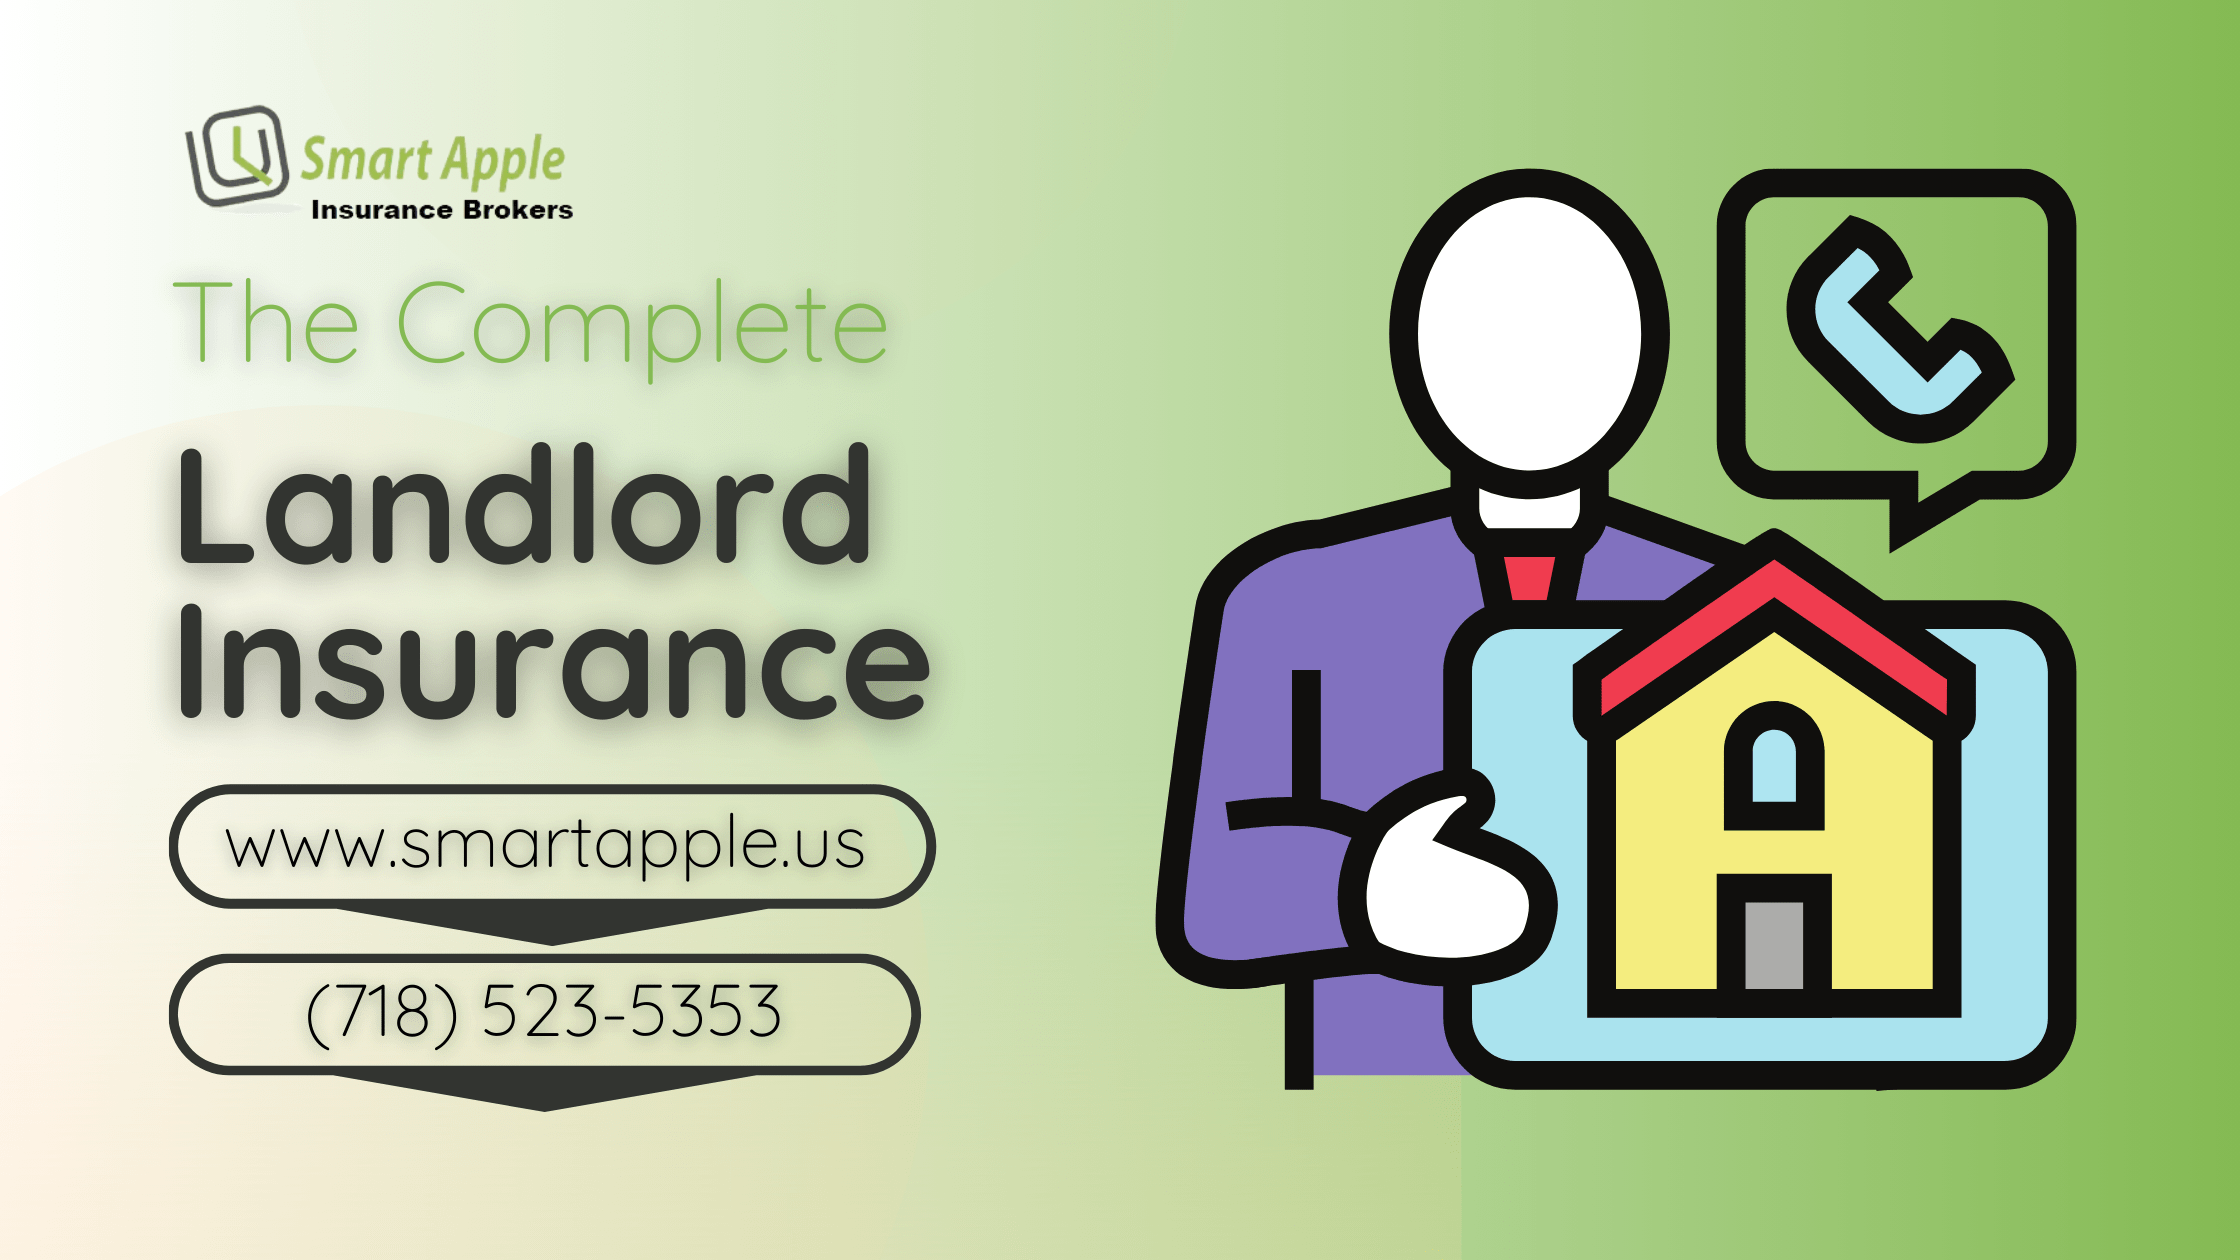 Landlord Insurance